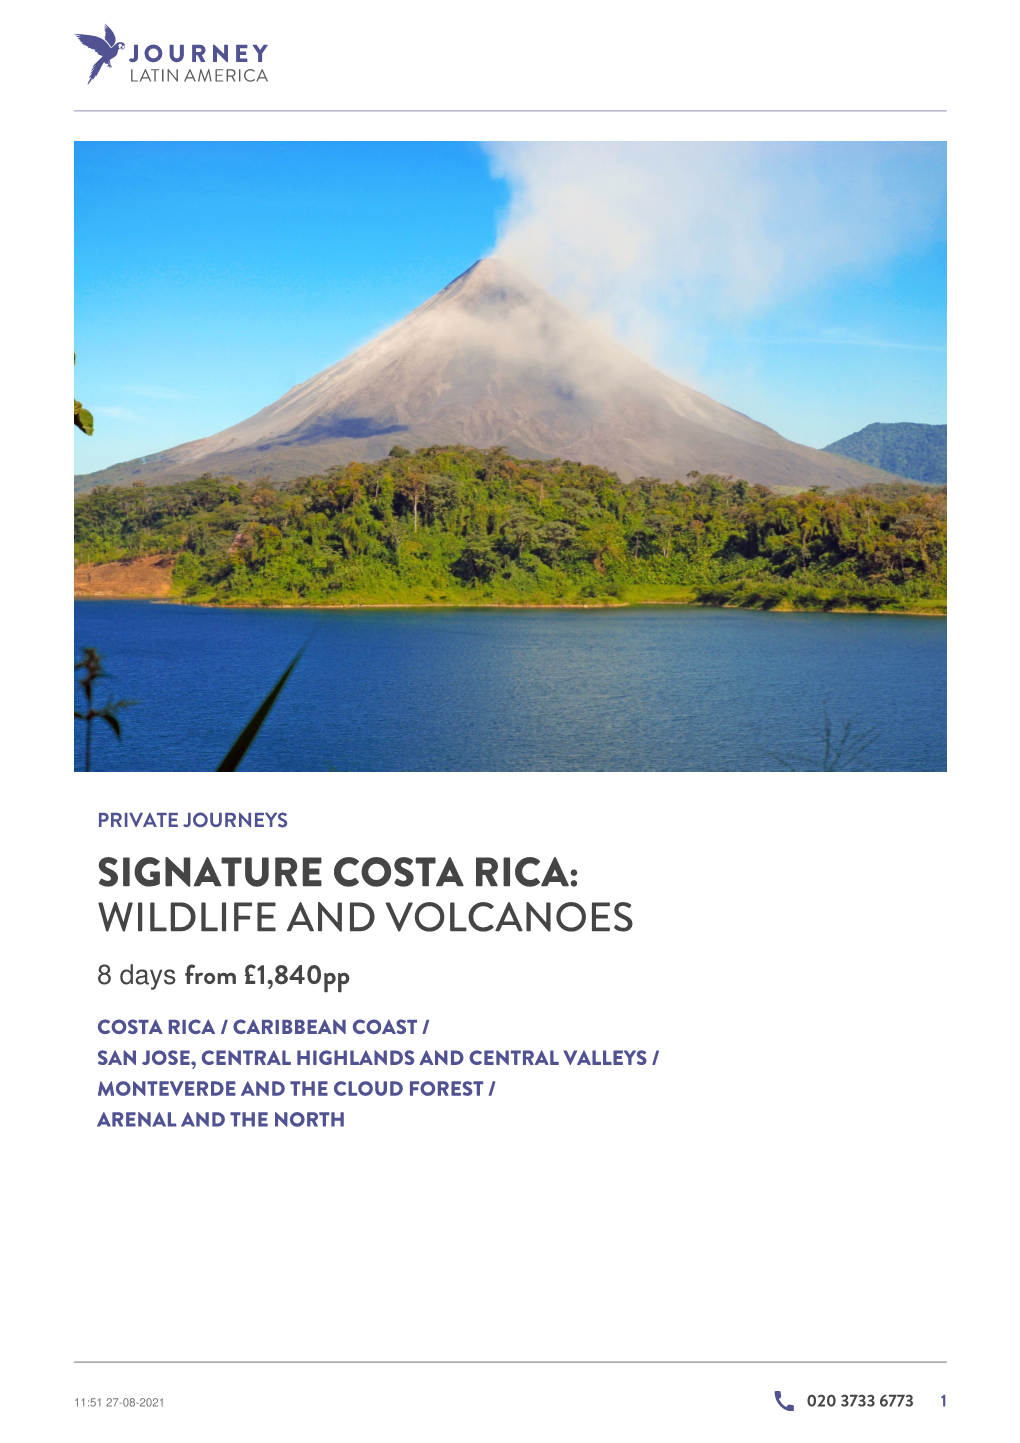 Signature Costa Rica: Wildlife and Volcanoes